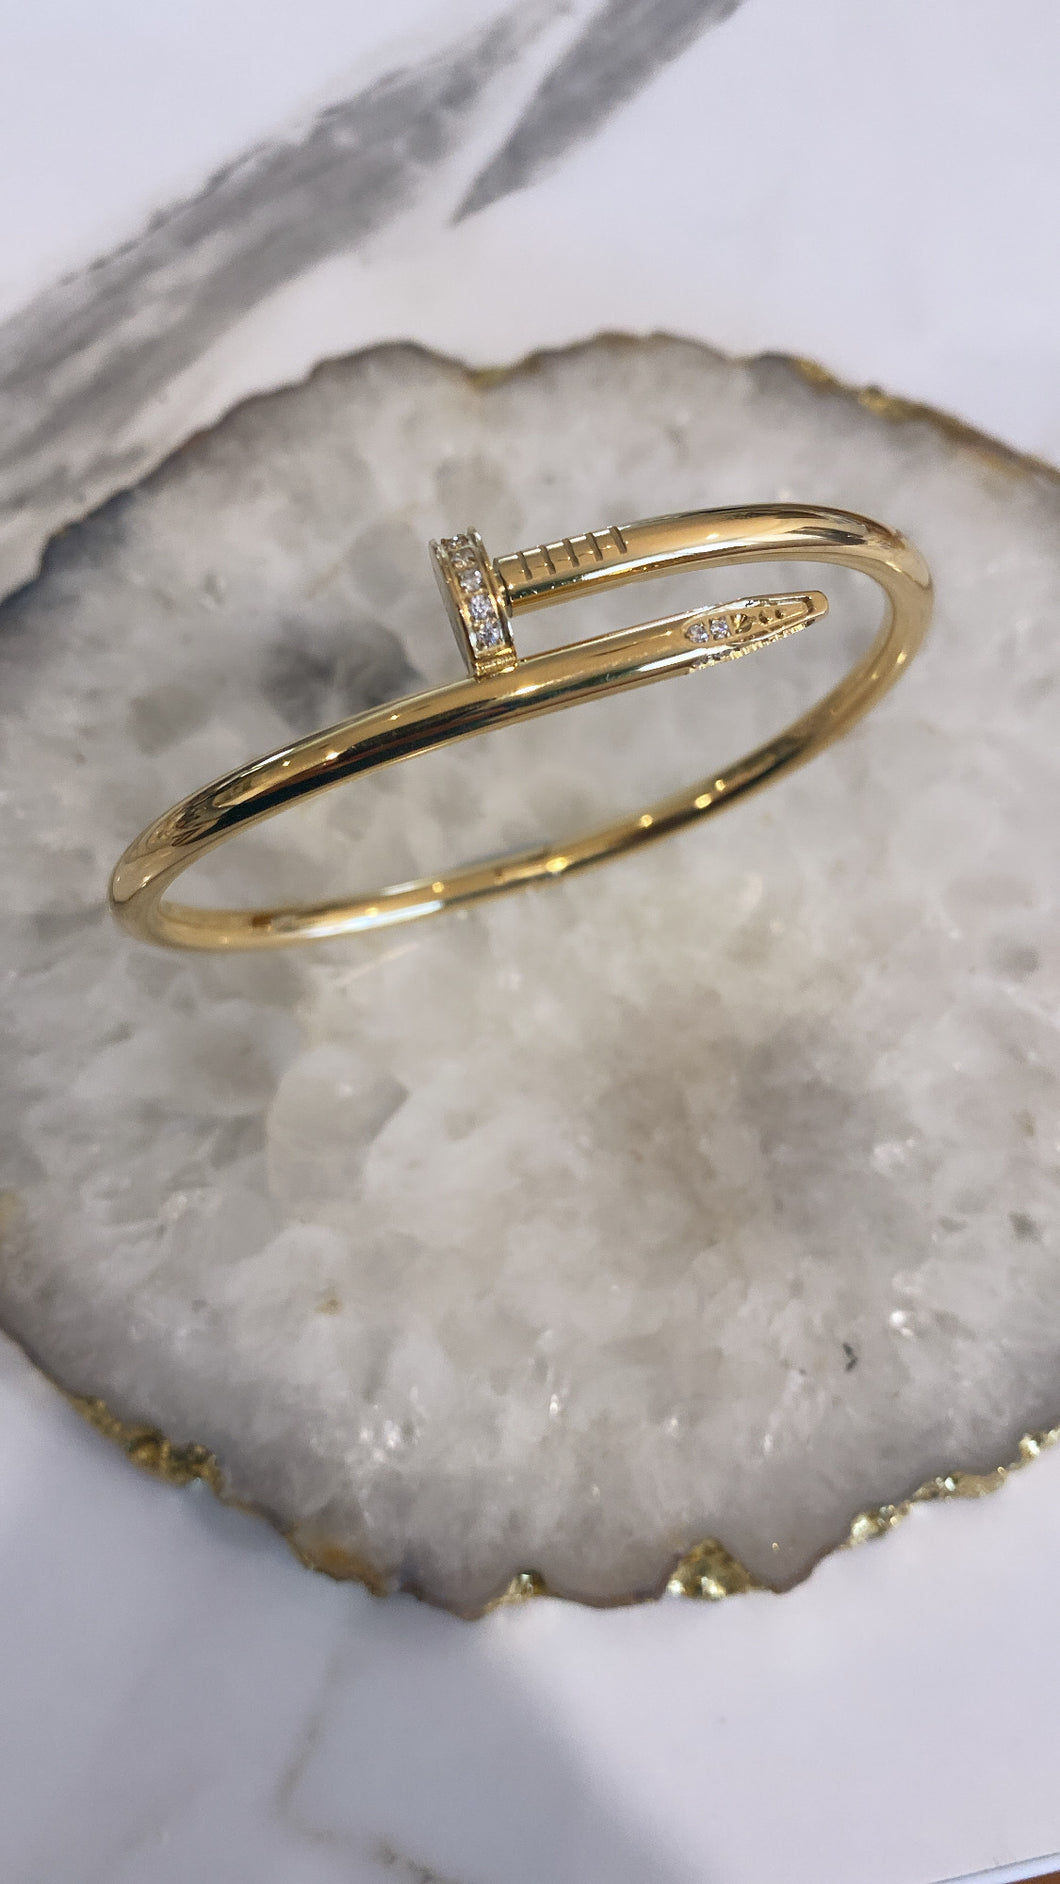 The gold diamond nail bracelet